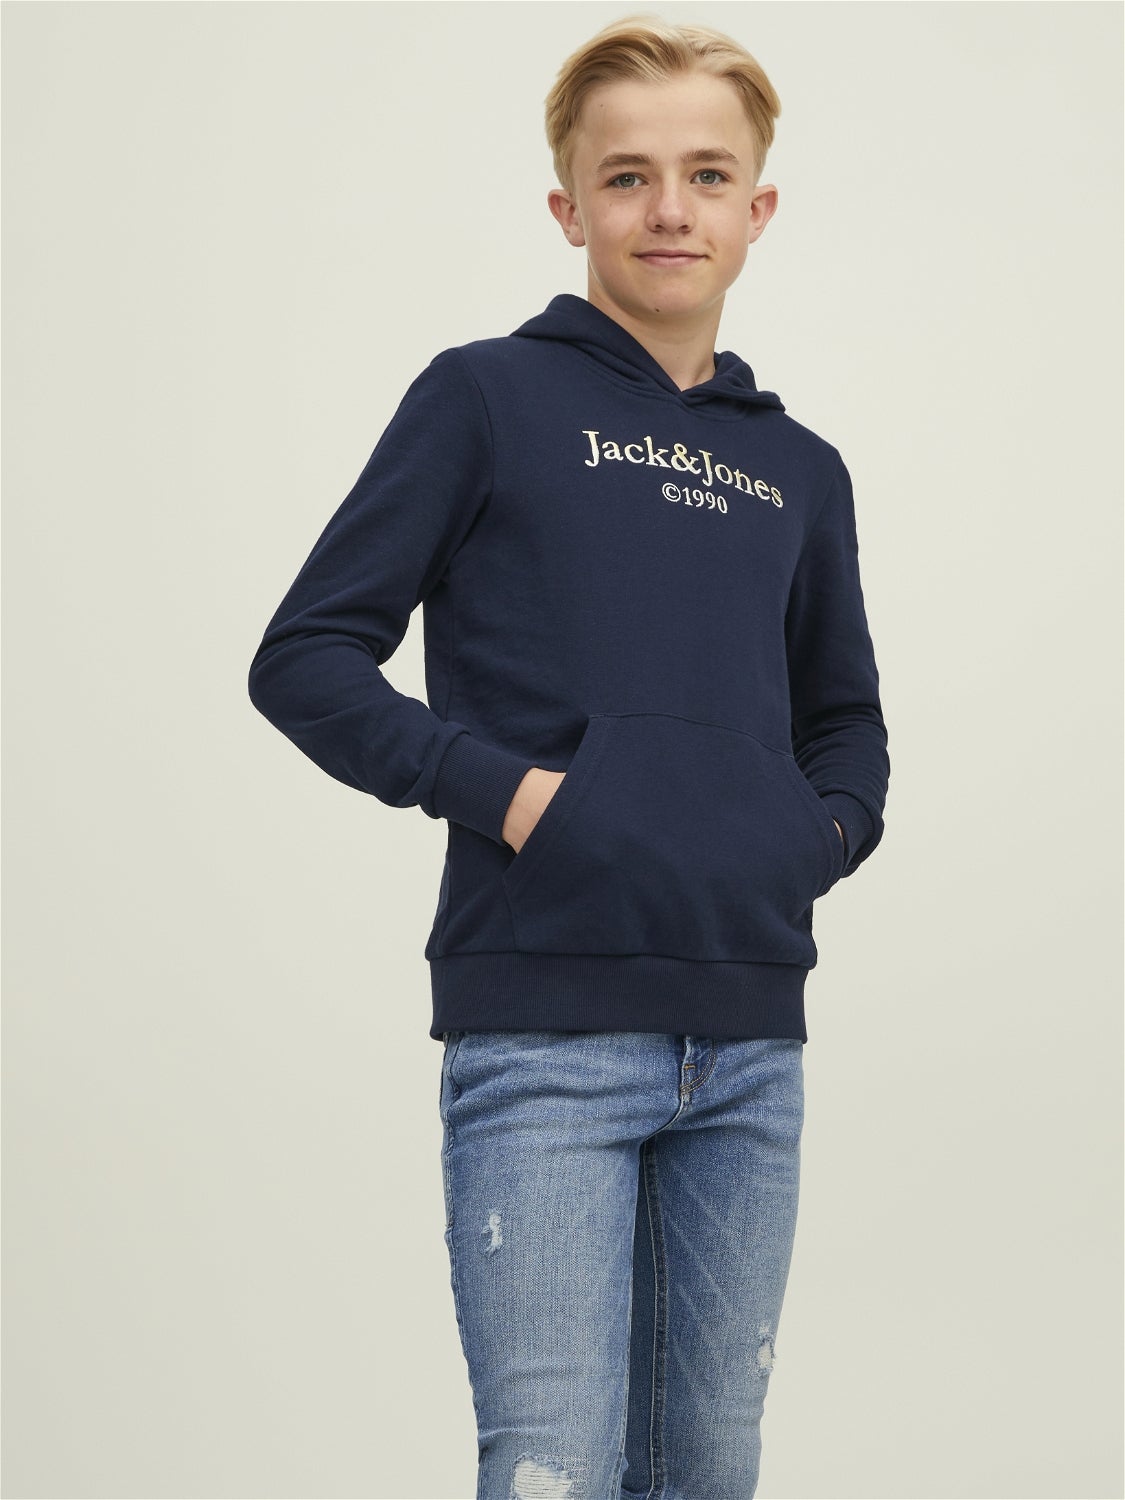 Jack & Jones Garçon Vêtements Pulls & Gilets Pulls Sweatshirts Garçons Blocs De Couleur Sweat À Capuche Men red 